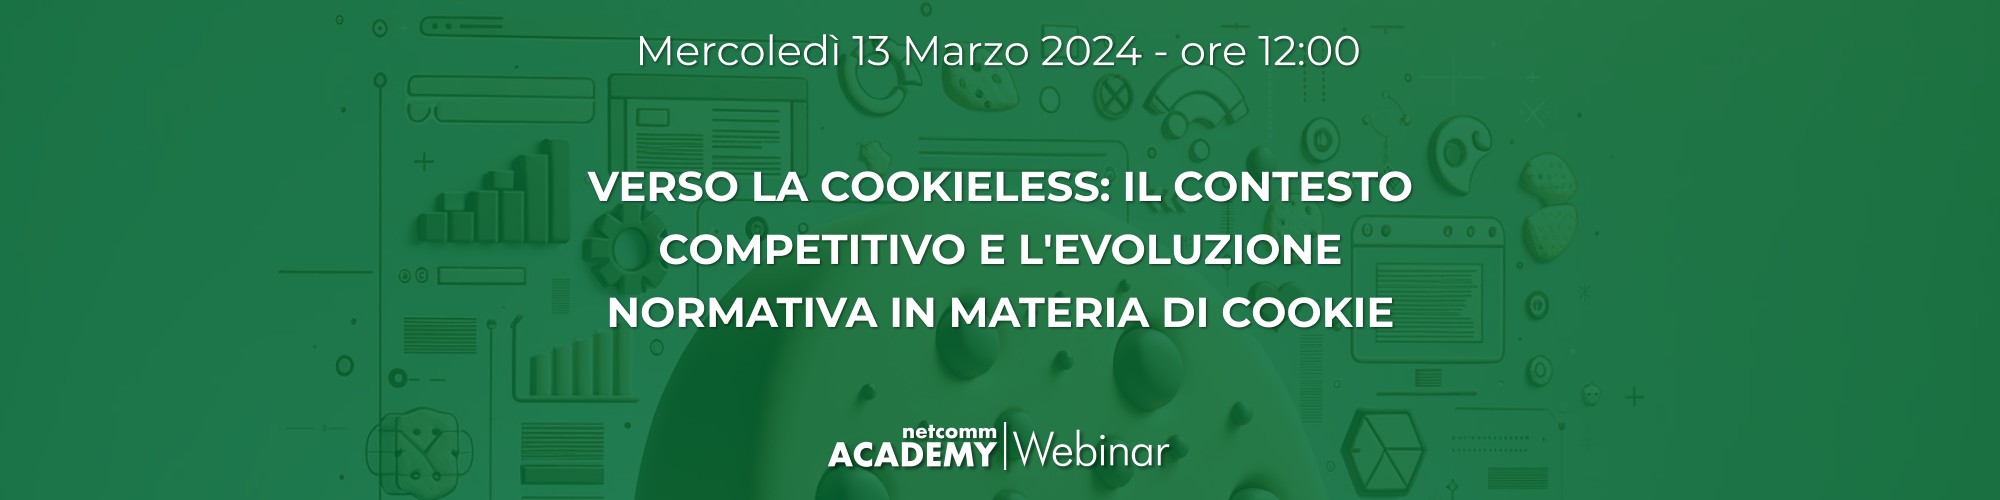 verso-la-cookieless_webinar-netcomm-academy-2024_sito